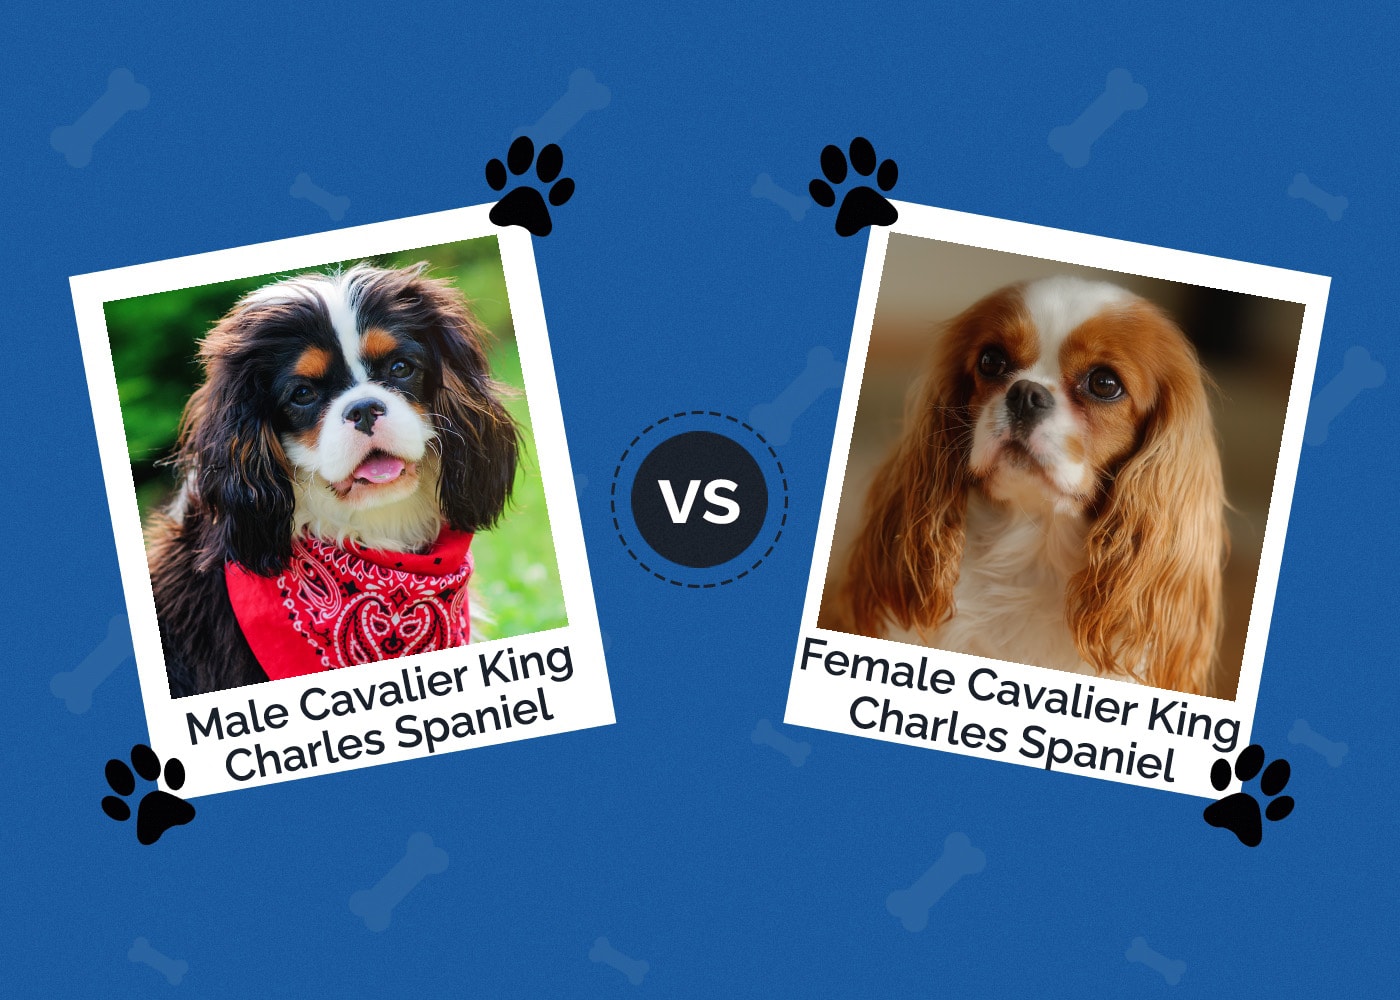 Male vs Female Cavalier King Charles Spaniel